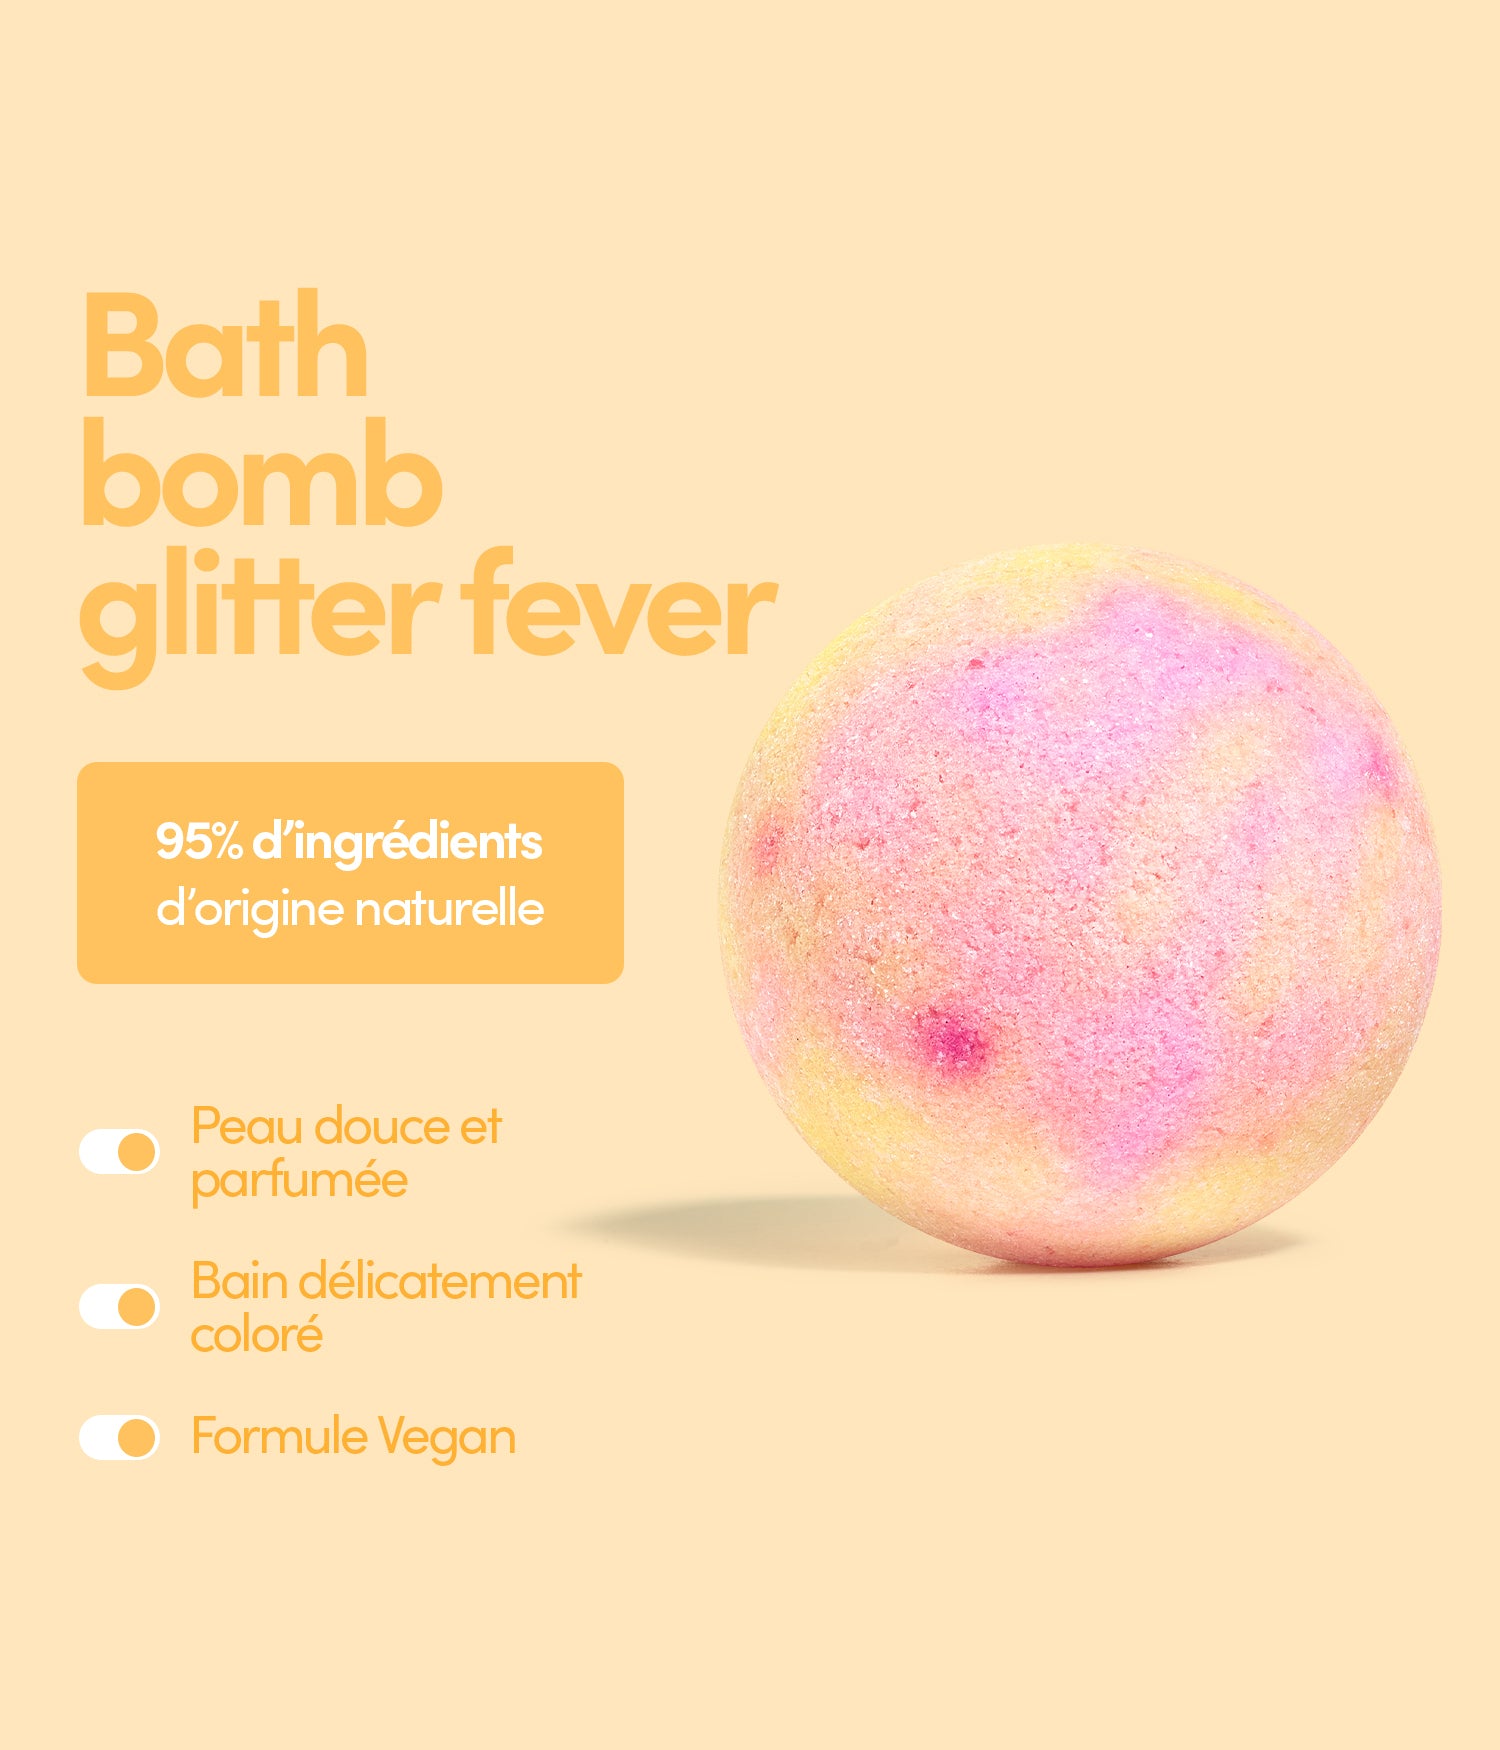 Glitter Fever Bath Bomb